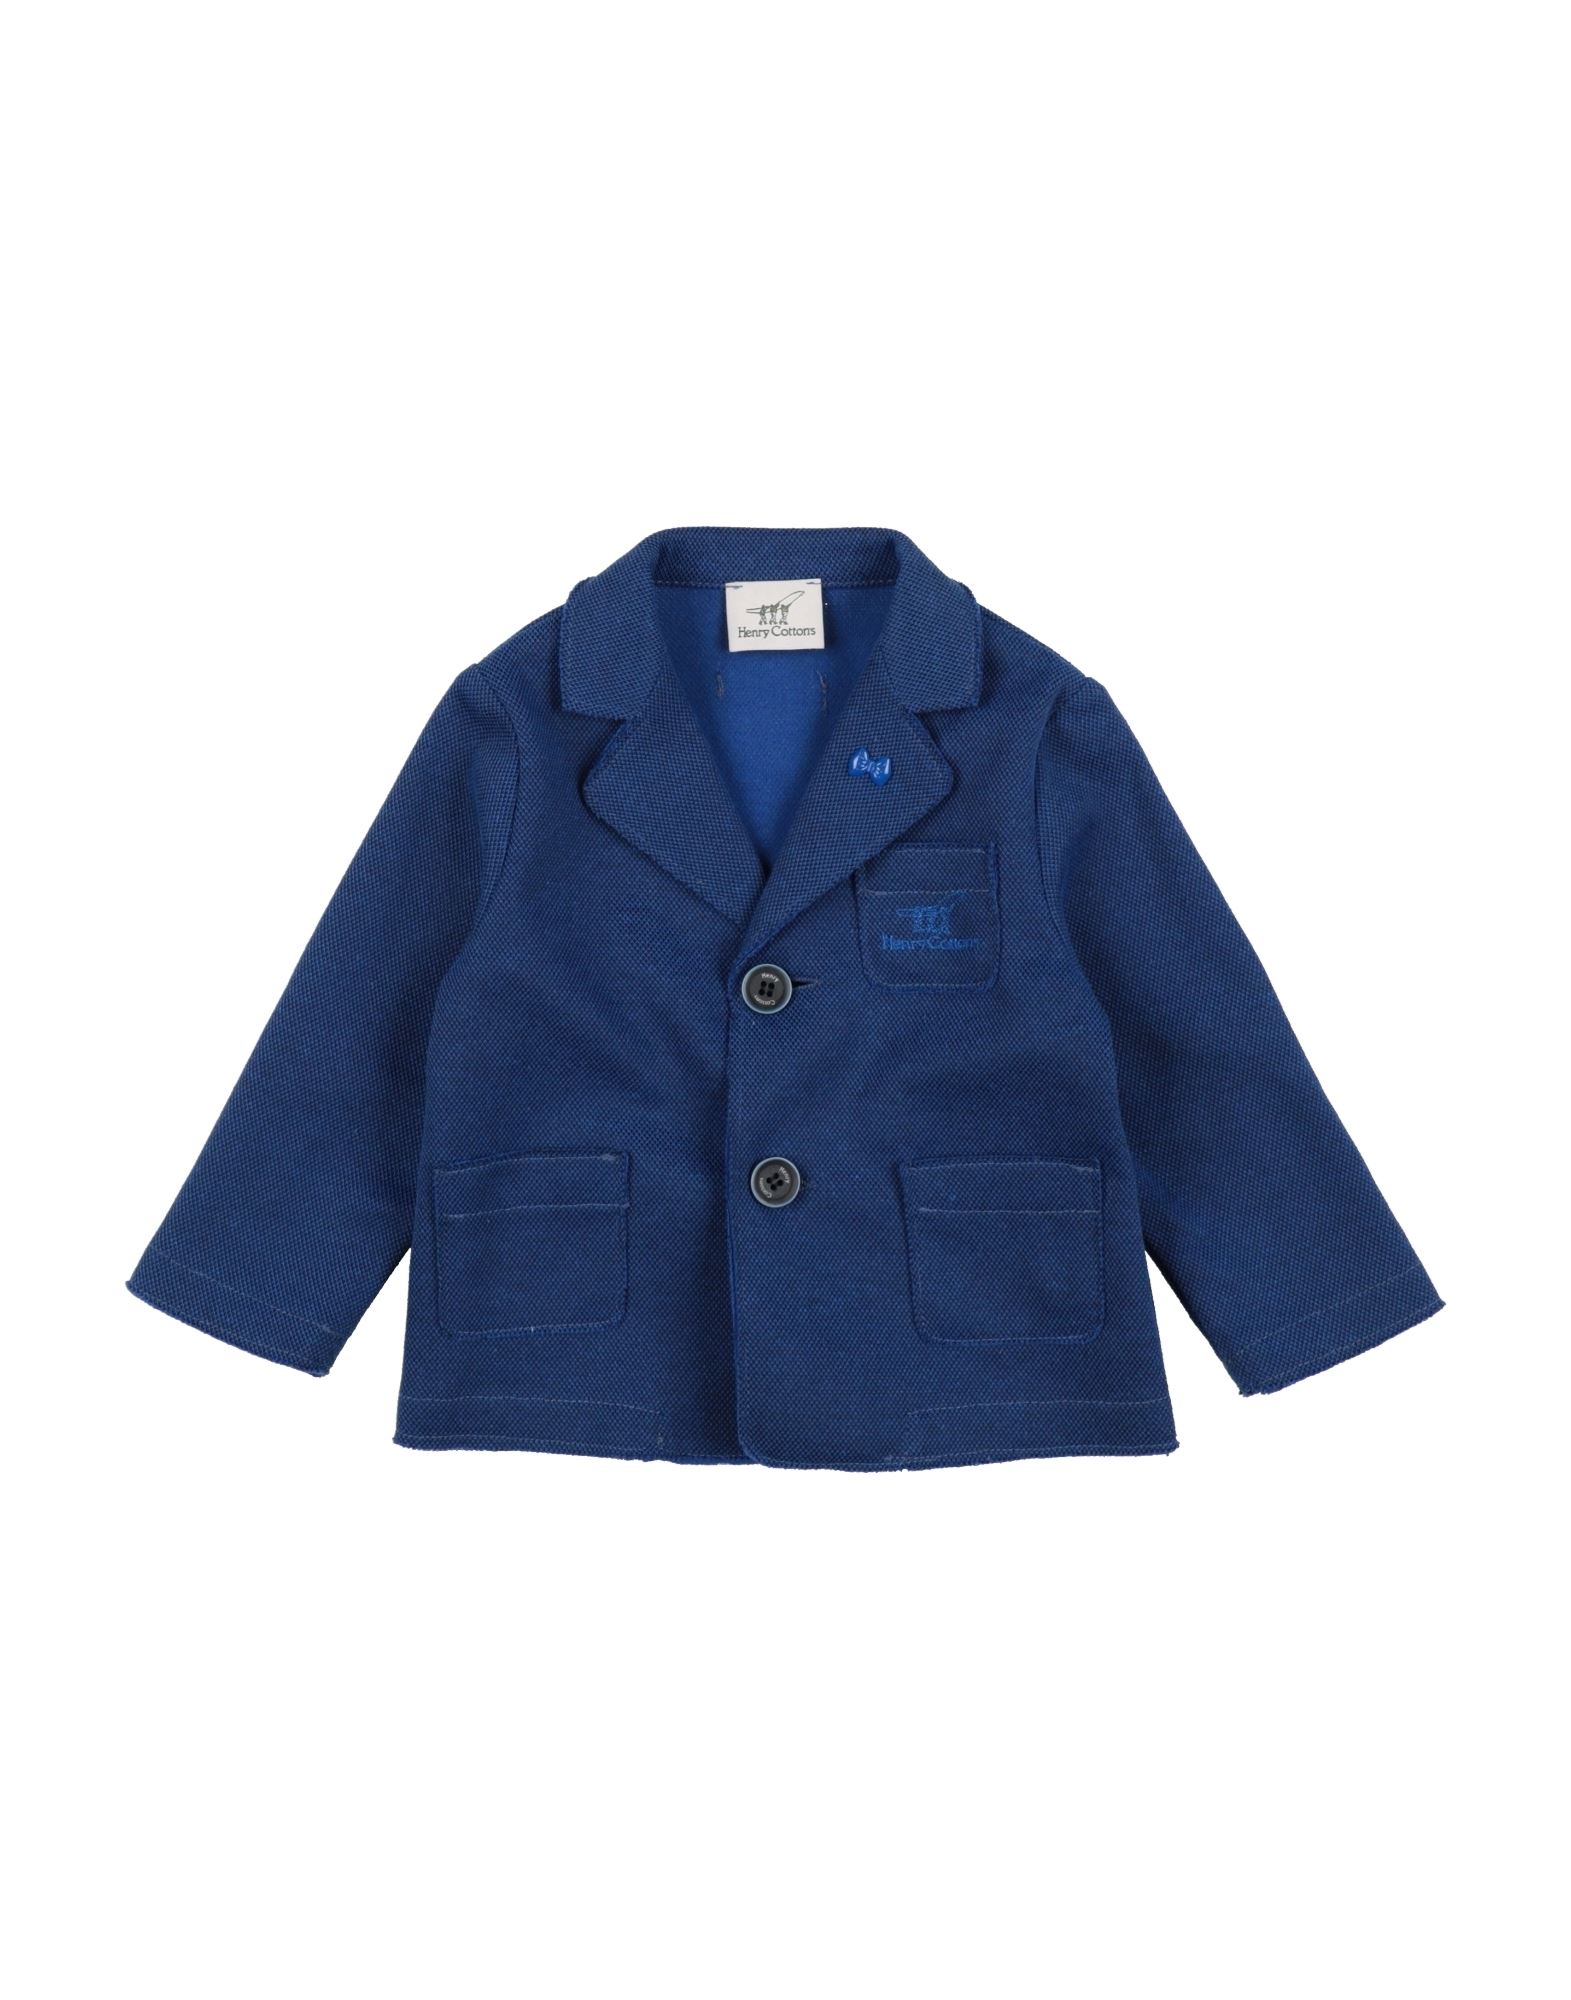 Henry Cotton's Kids' Suit Jackets In Dark Blue